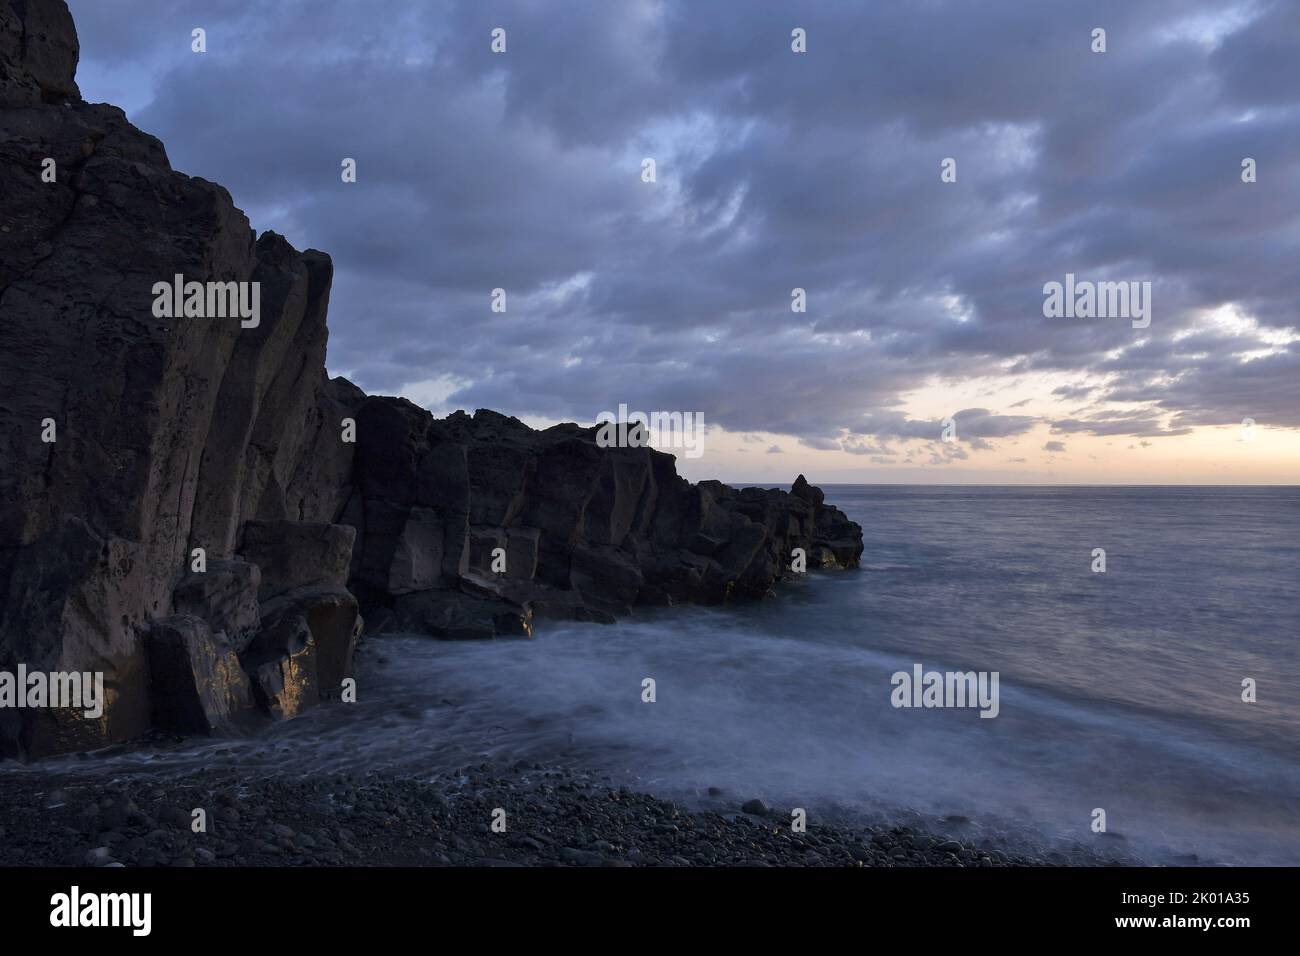 Volcanic rocks formation on the coast of Atlantic ocean at dusk, Praia Formosa beach near Funchal Madeira Portugal. Stock Photo